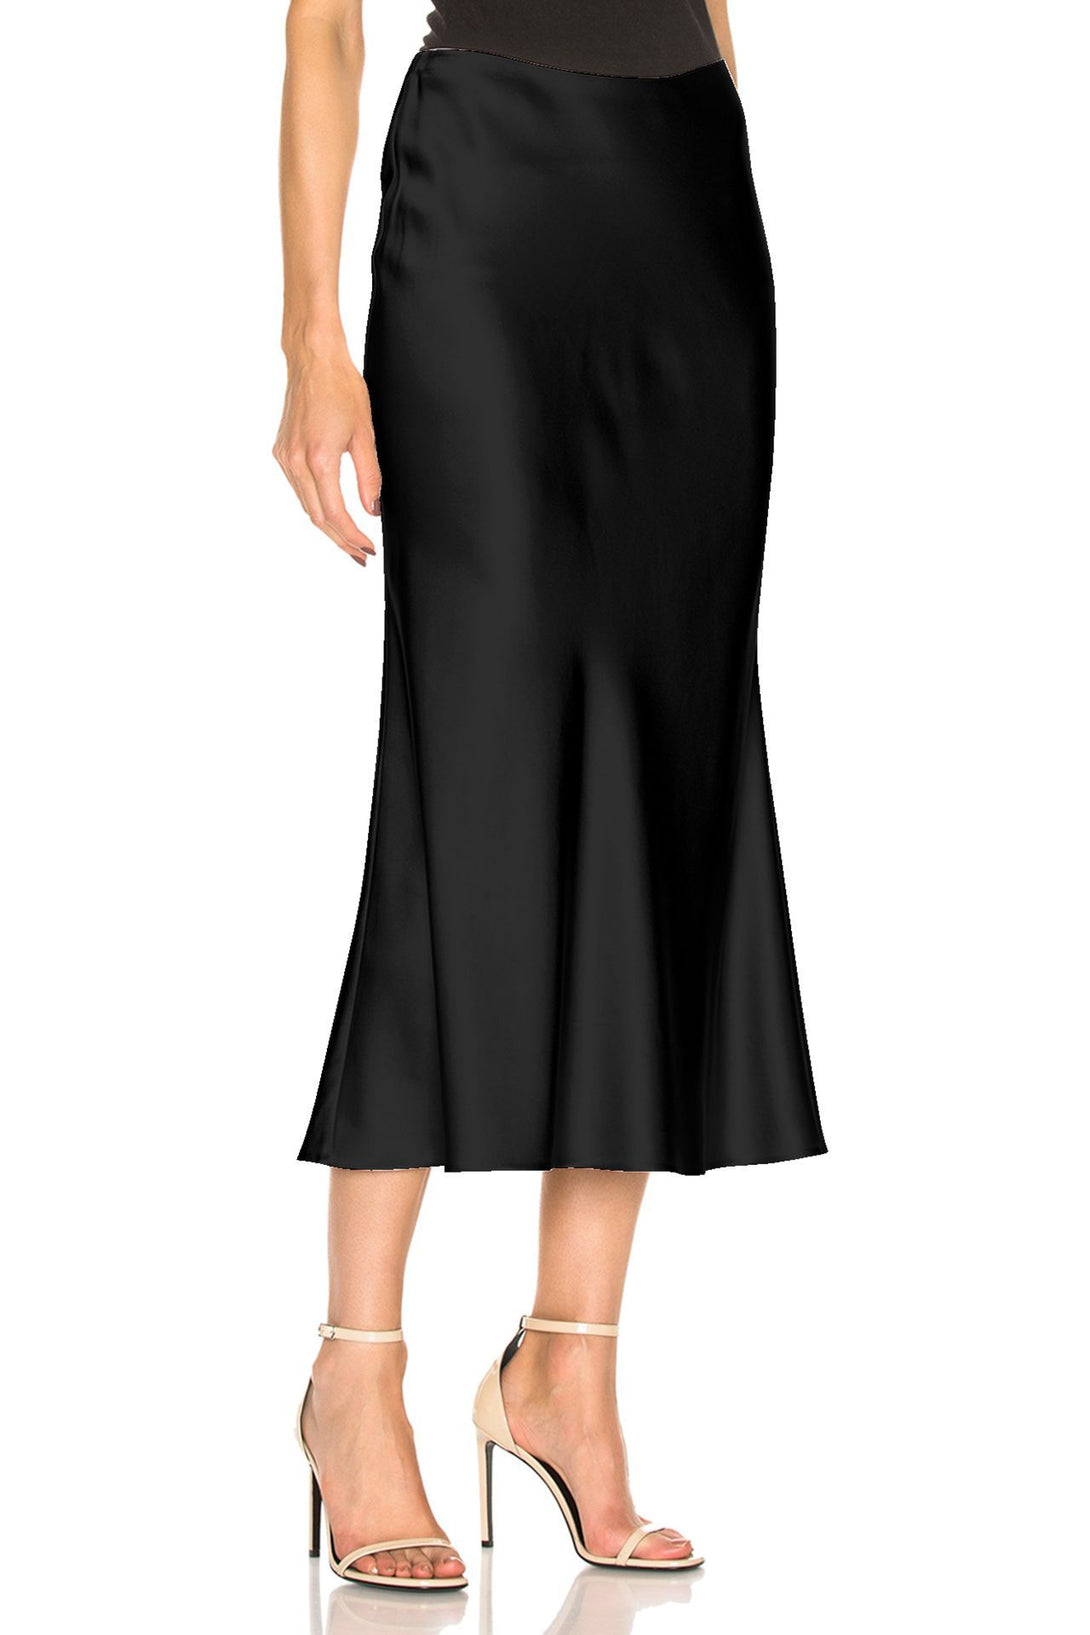 Skirt-In-Black-For-Womens-By-Kyle-Richard